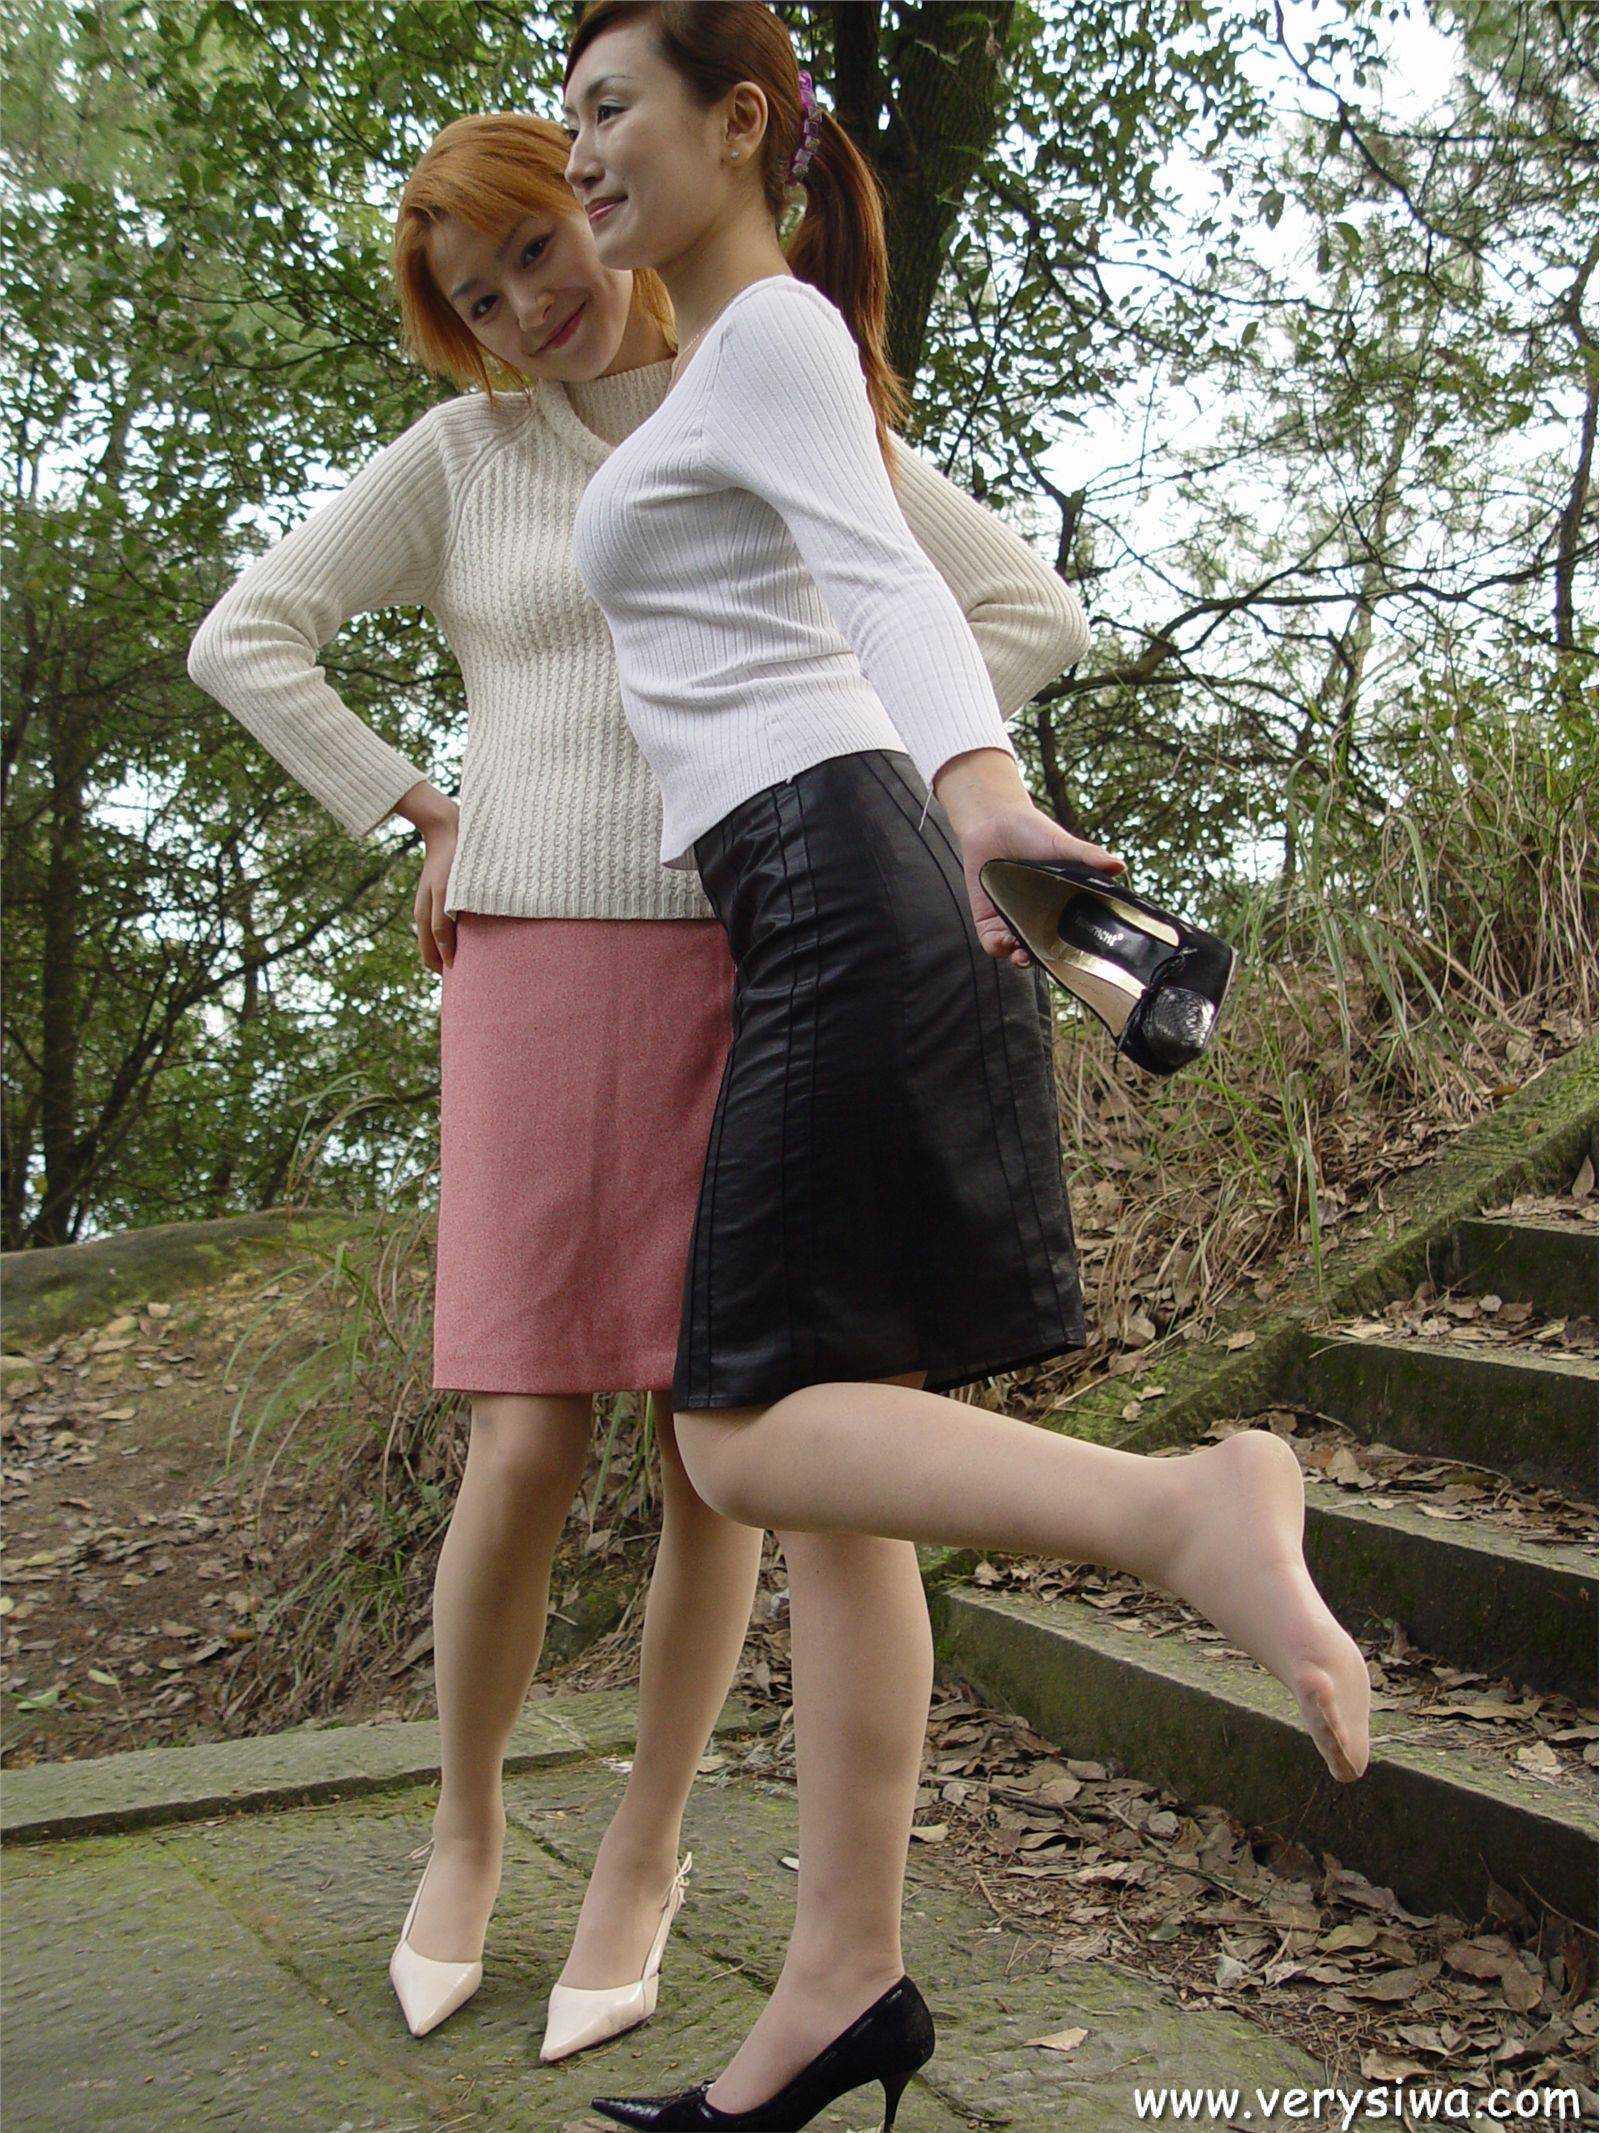 Zhonggaoyi two sisters silk stockings Meizu silk stockings beauty photo